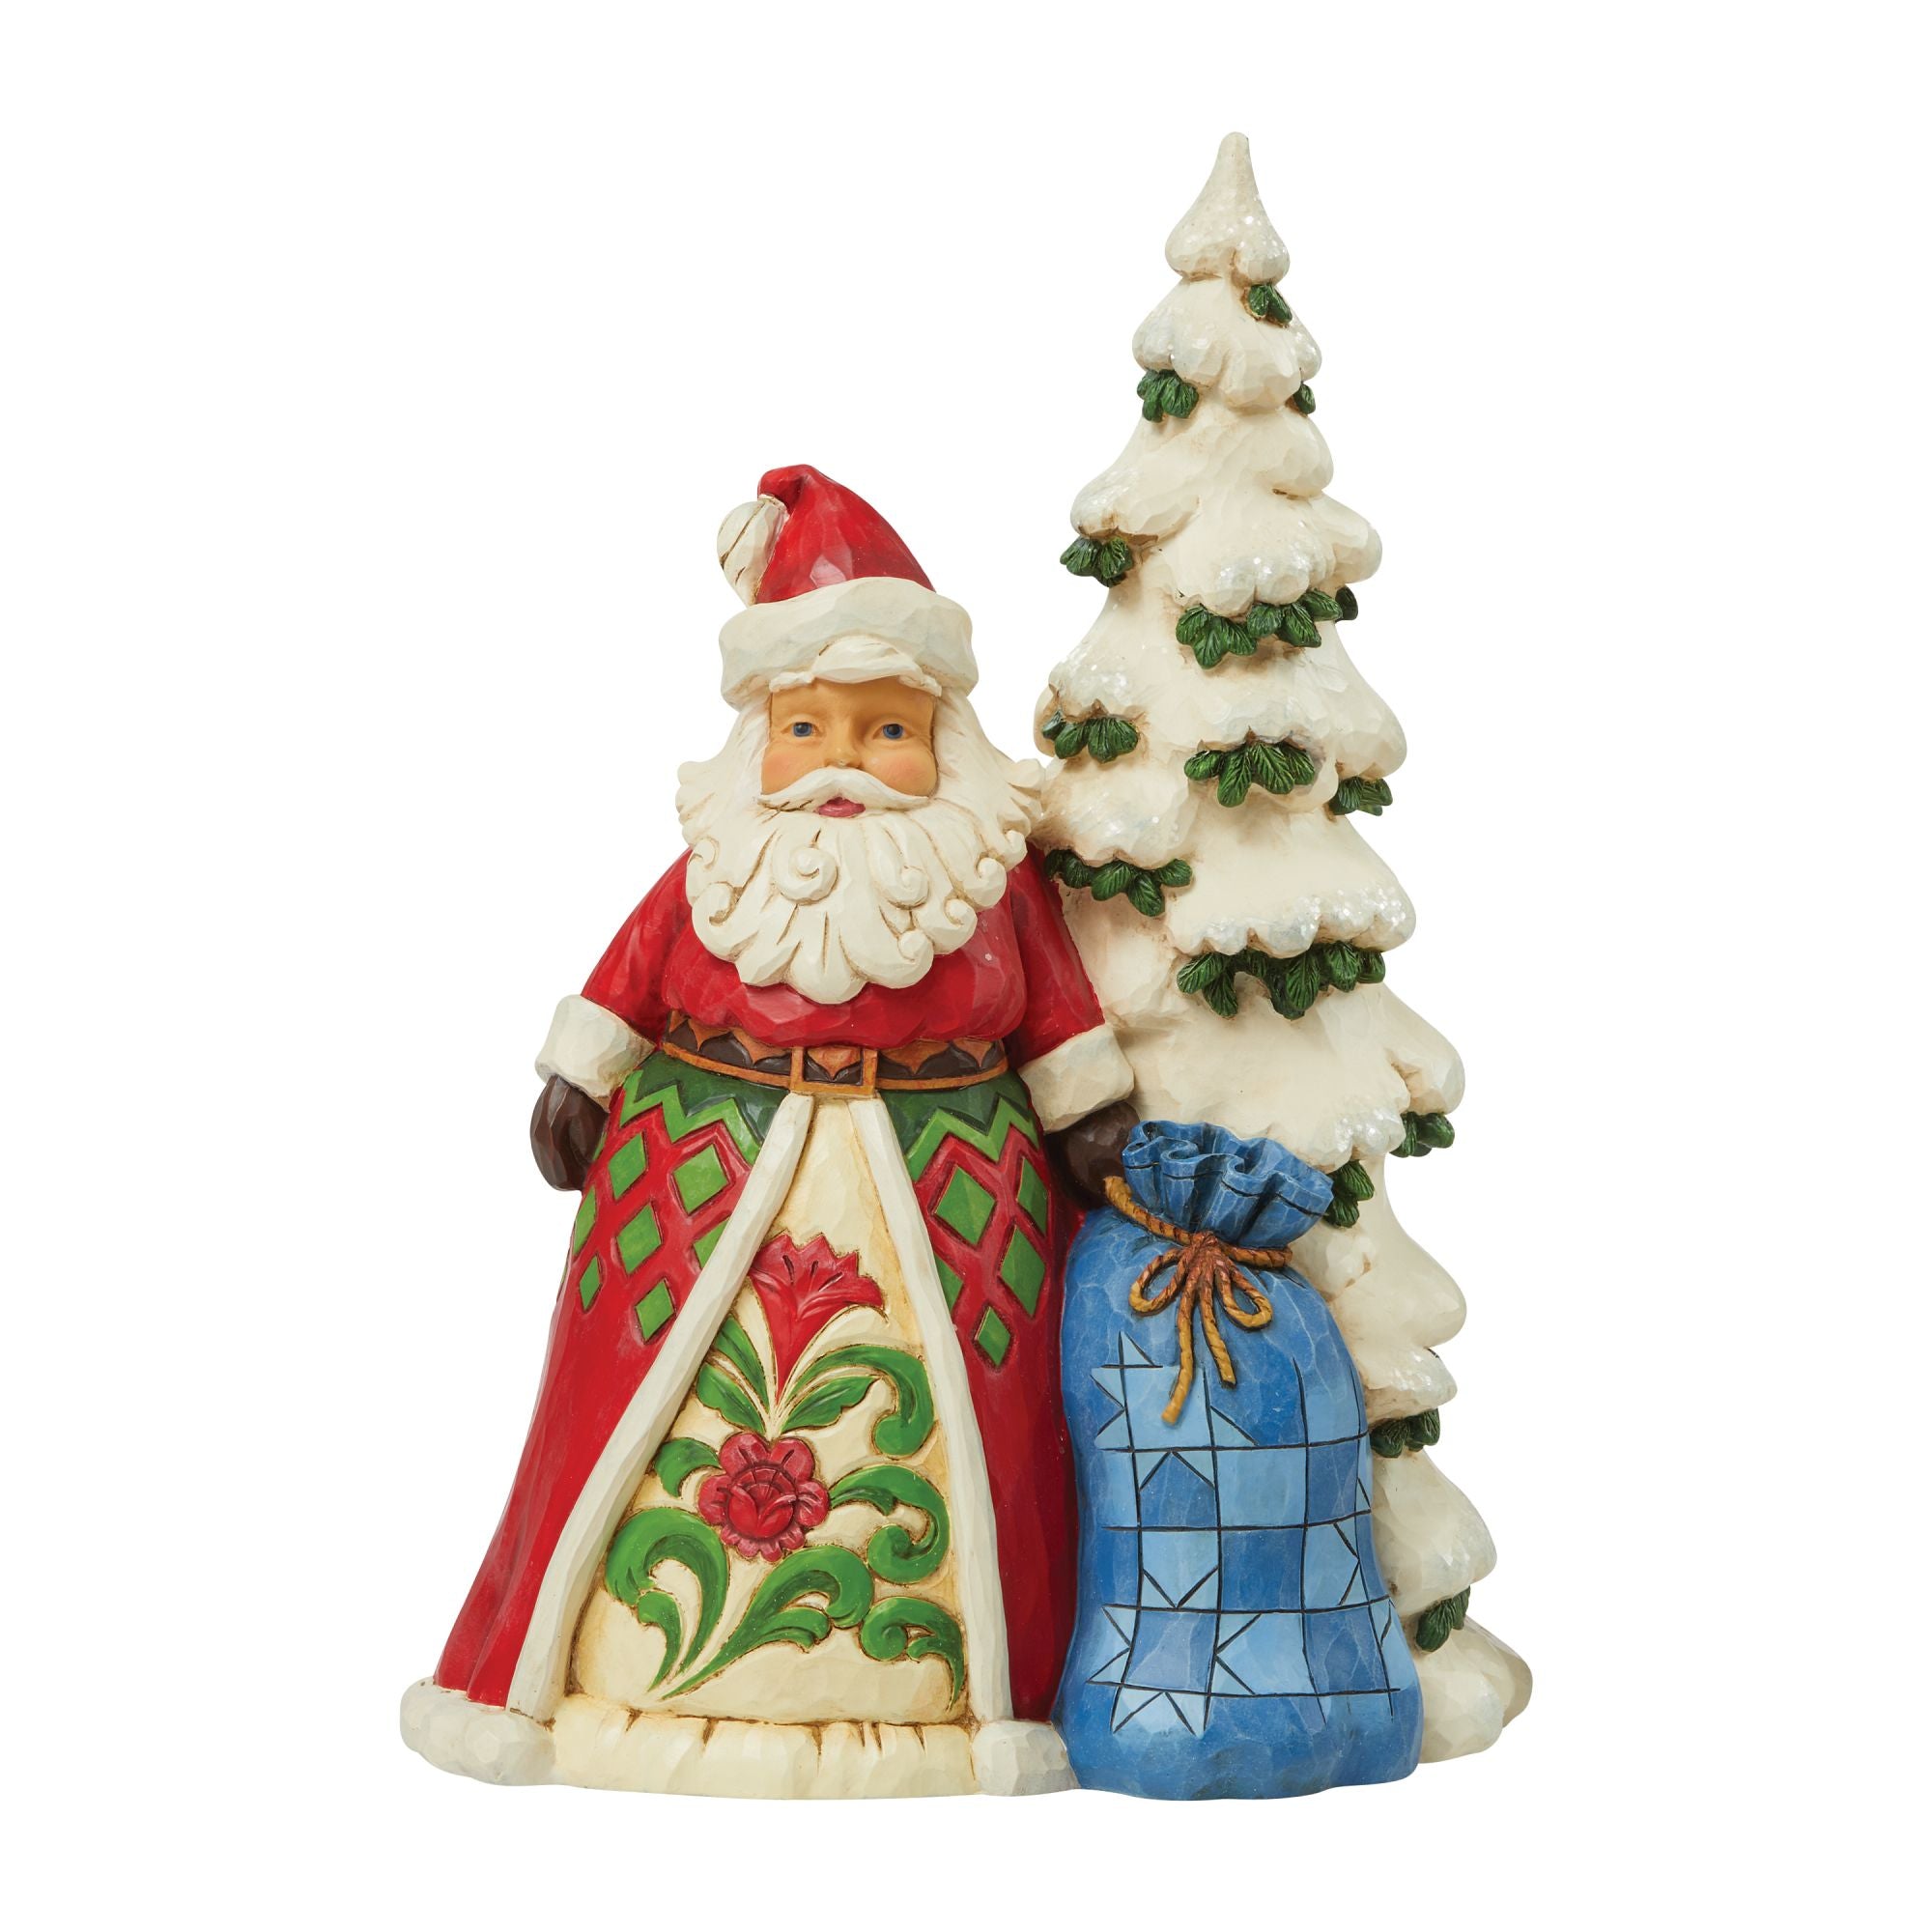 Santa Next To Tree with Toybag